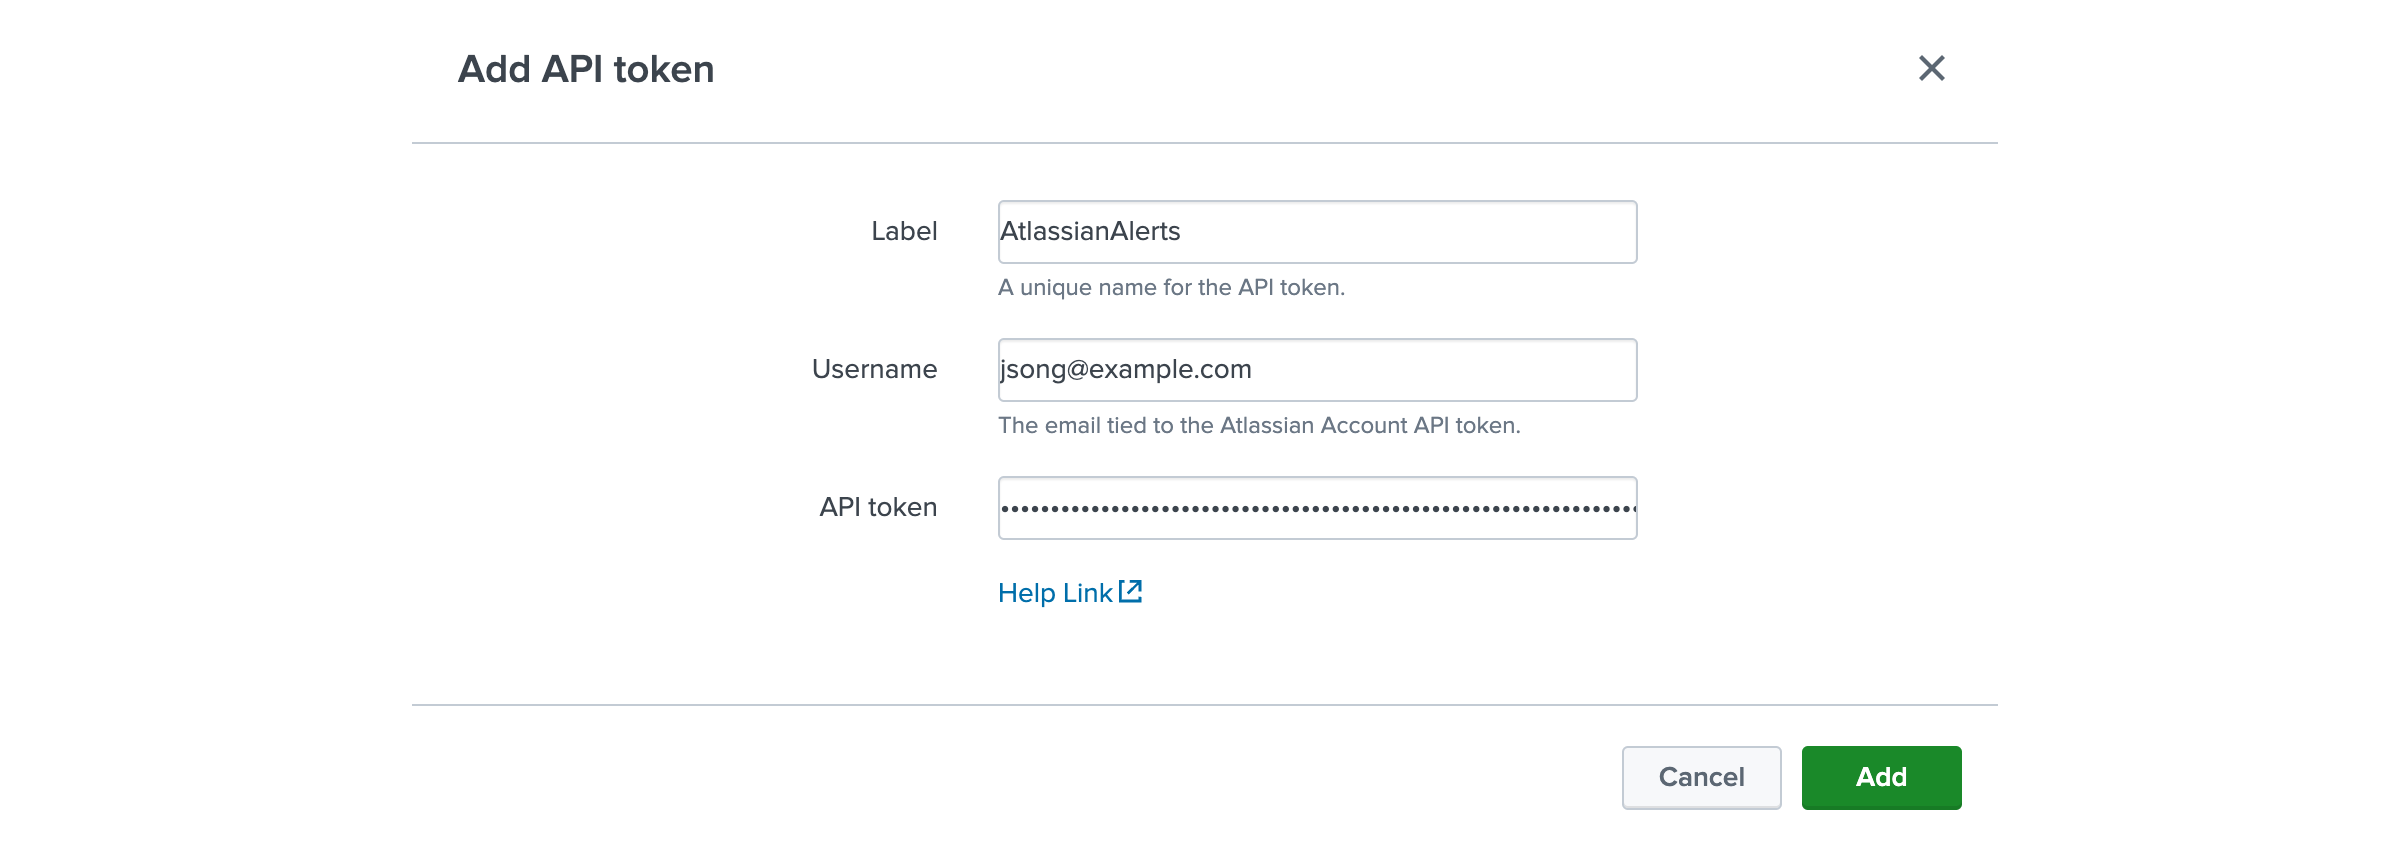 Add API token screen in Splunk